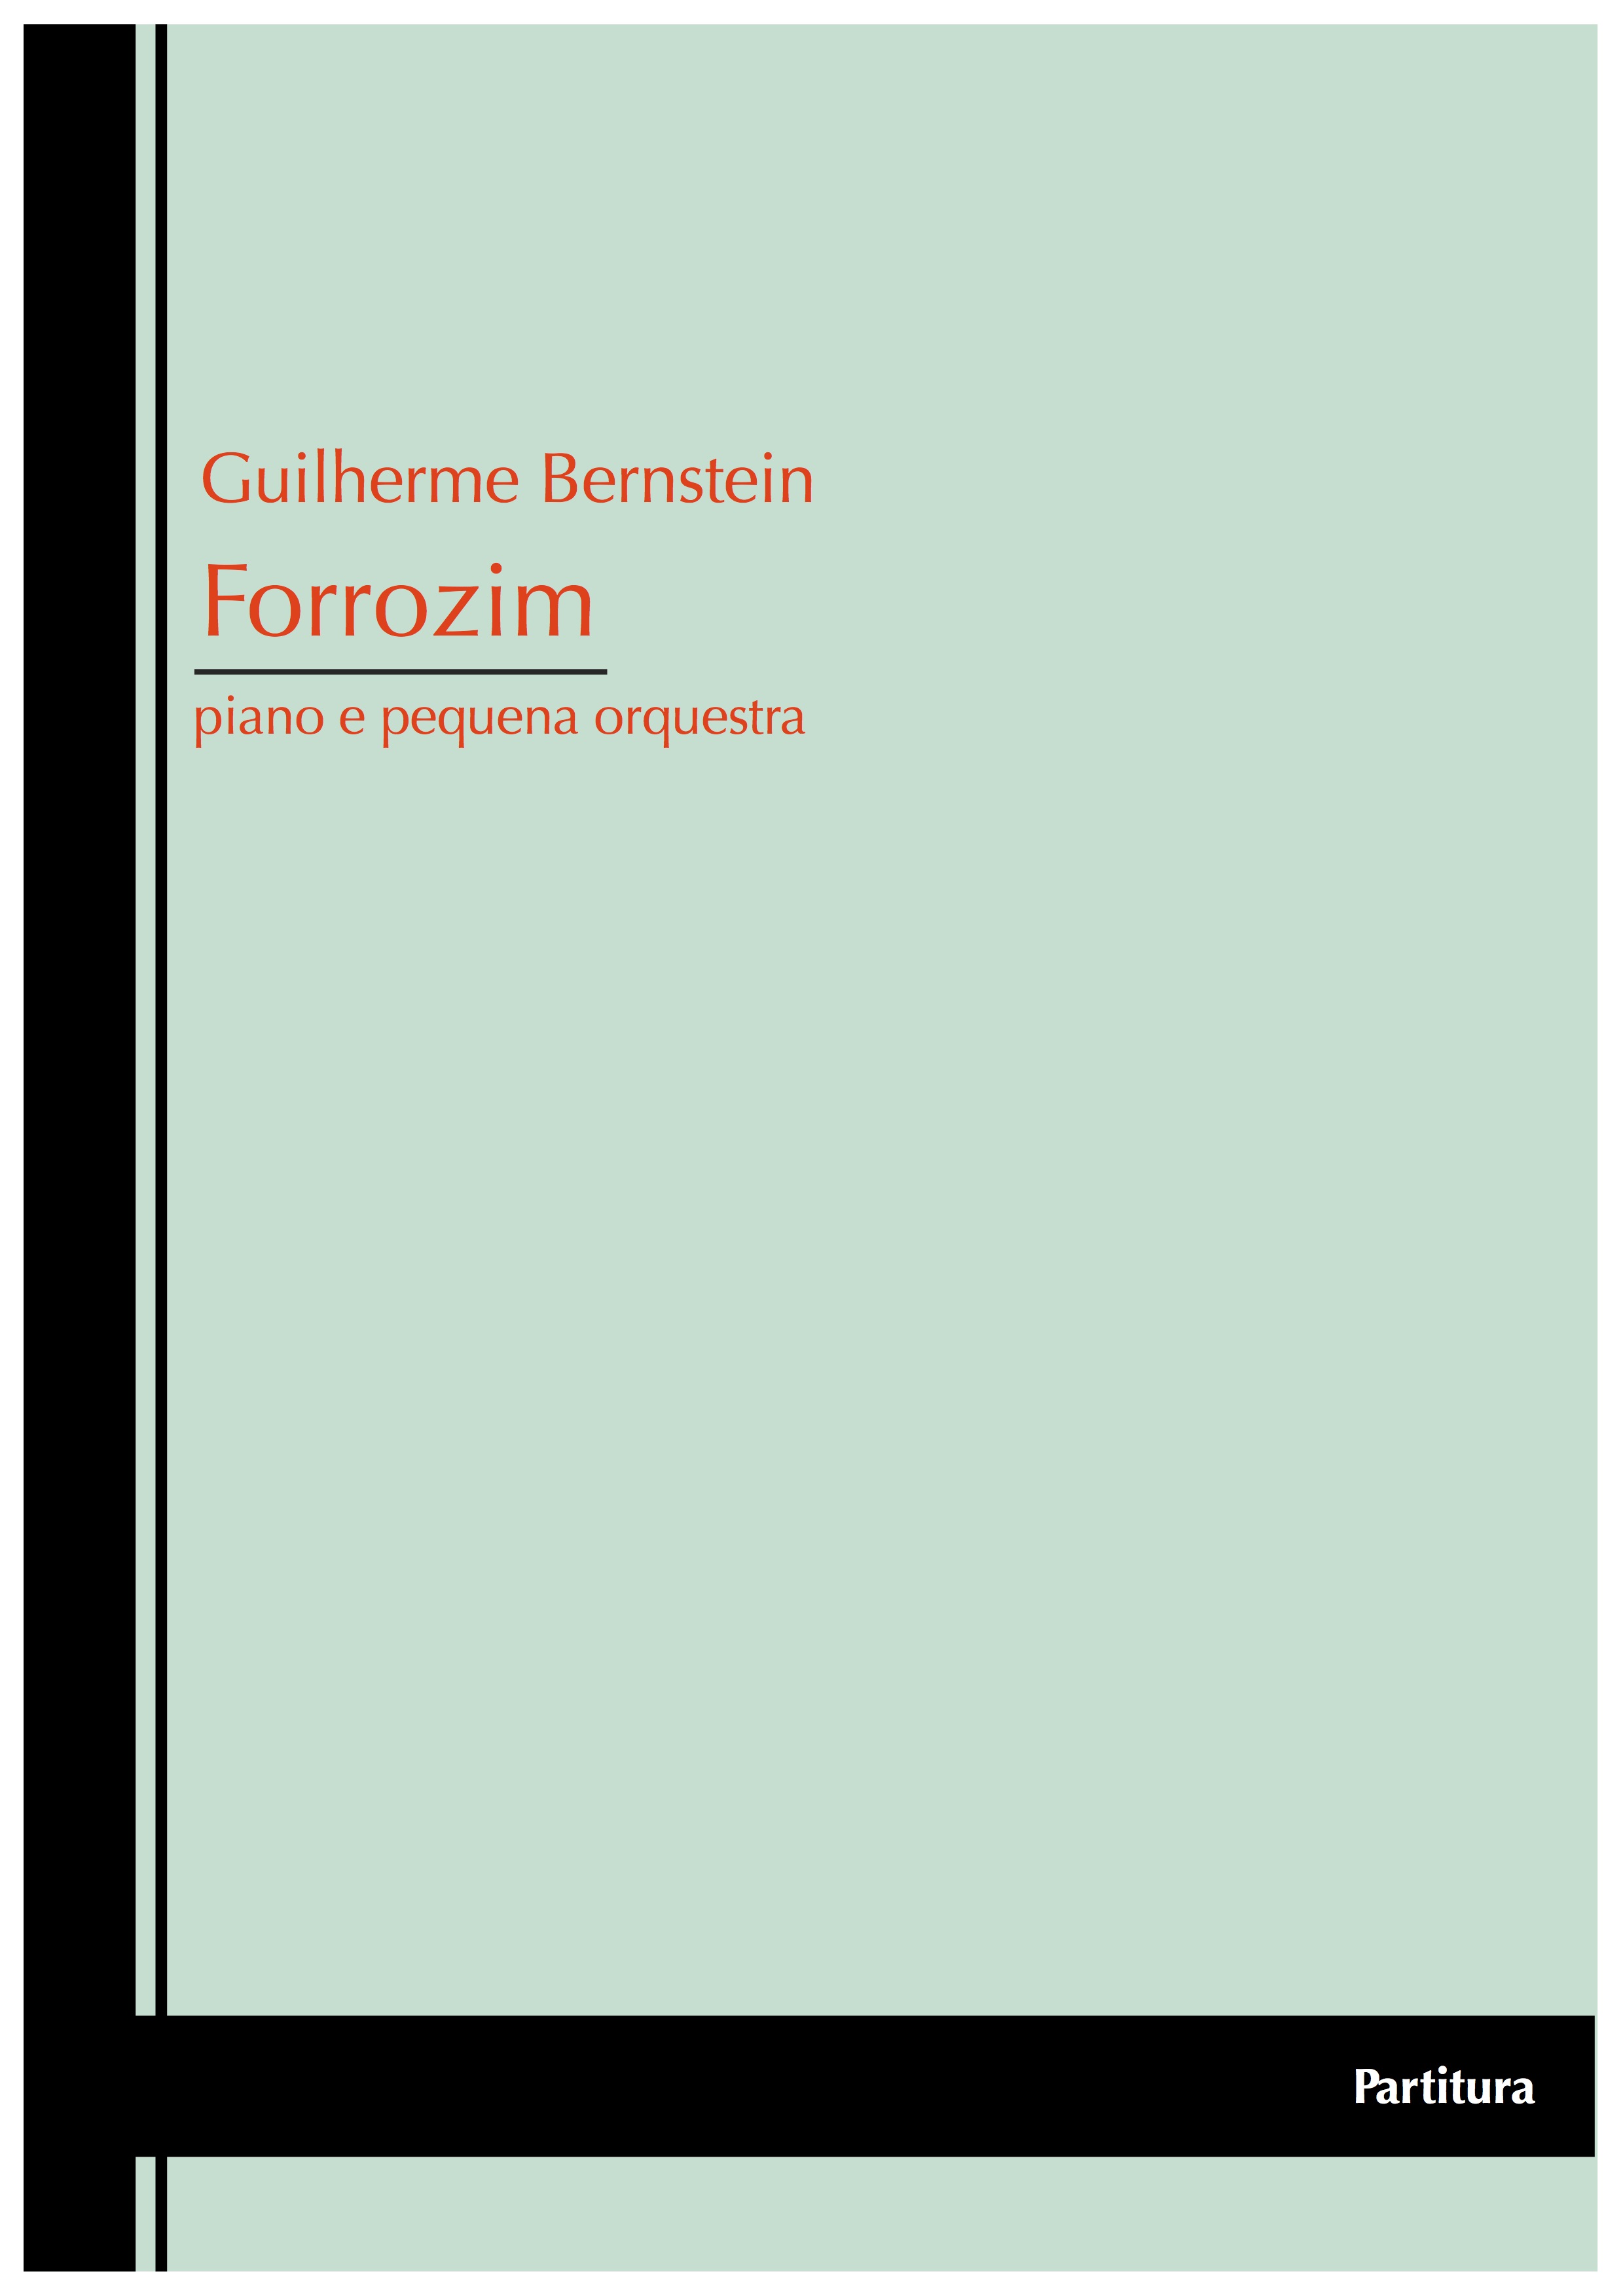 Forrozim (piano etc.) sample cover